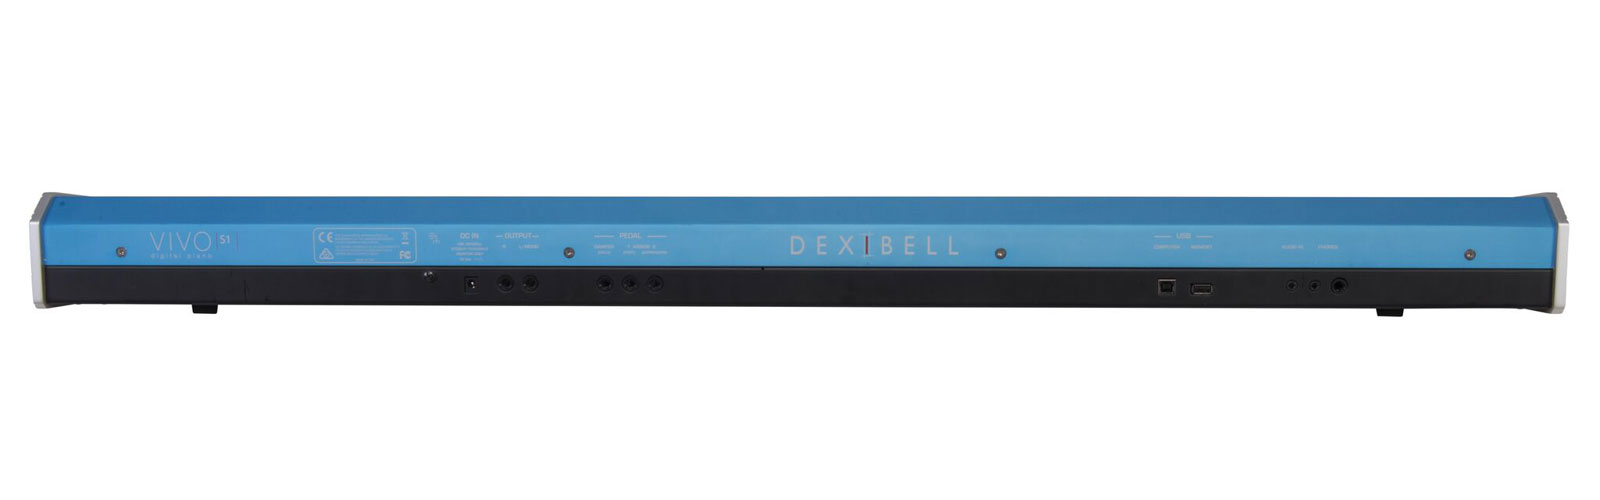 Dexibell Vivos1 - Noir - Portable digital piano - Variation 2